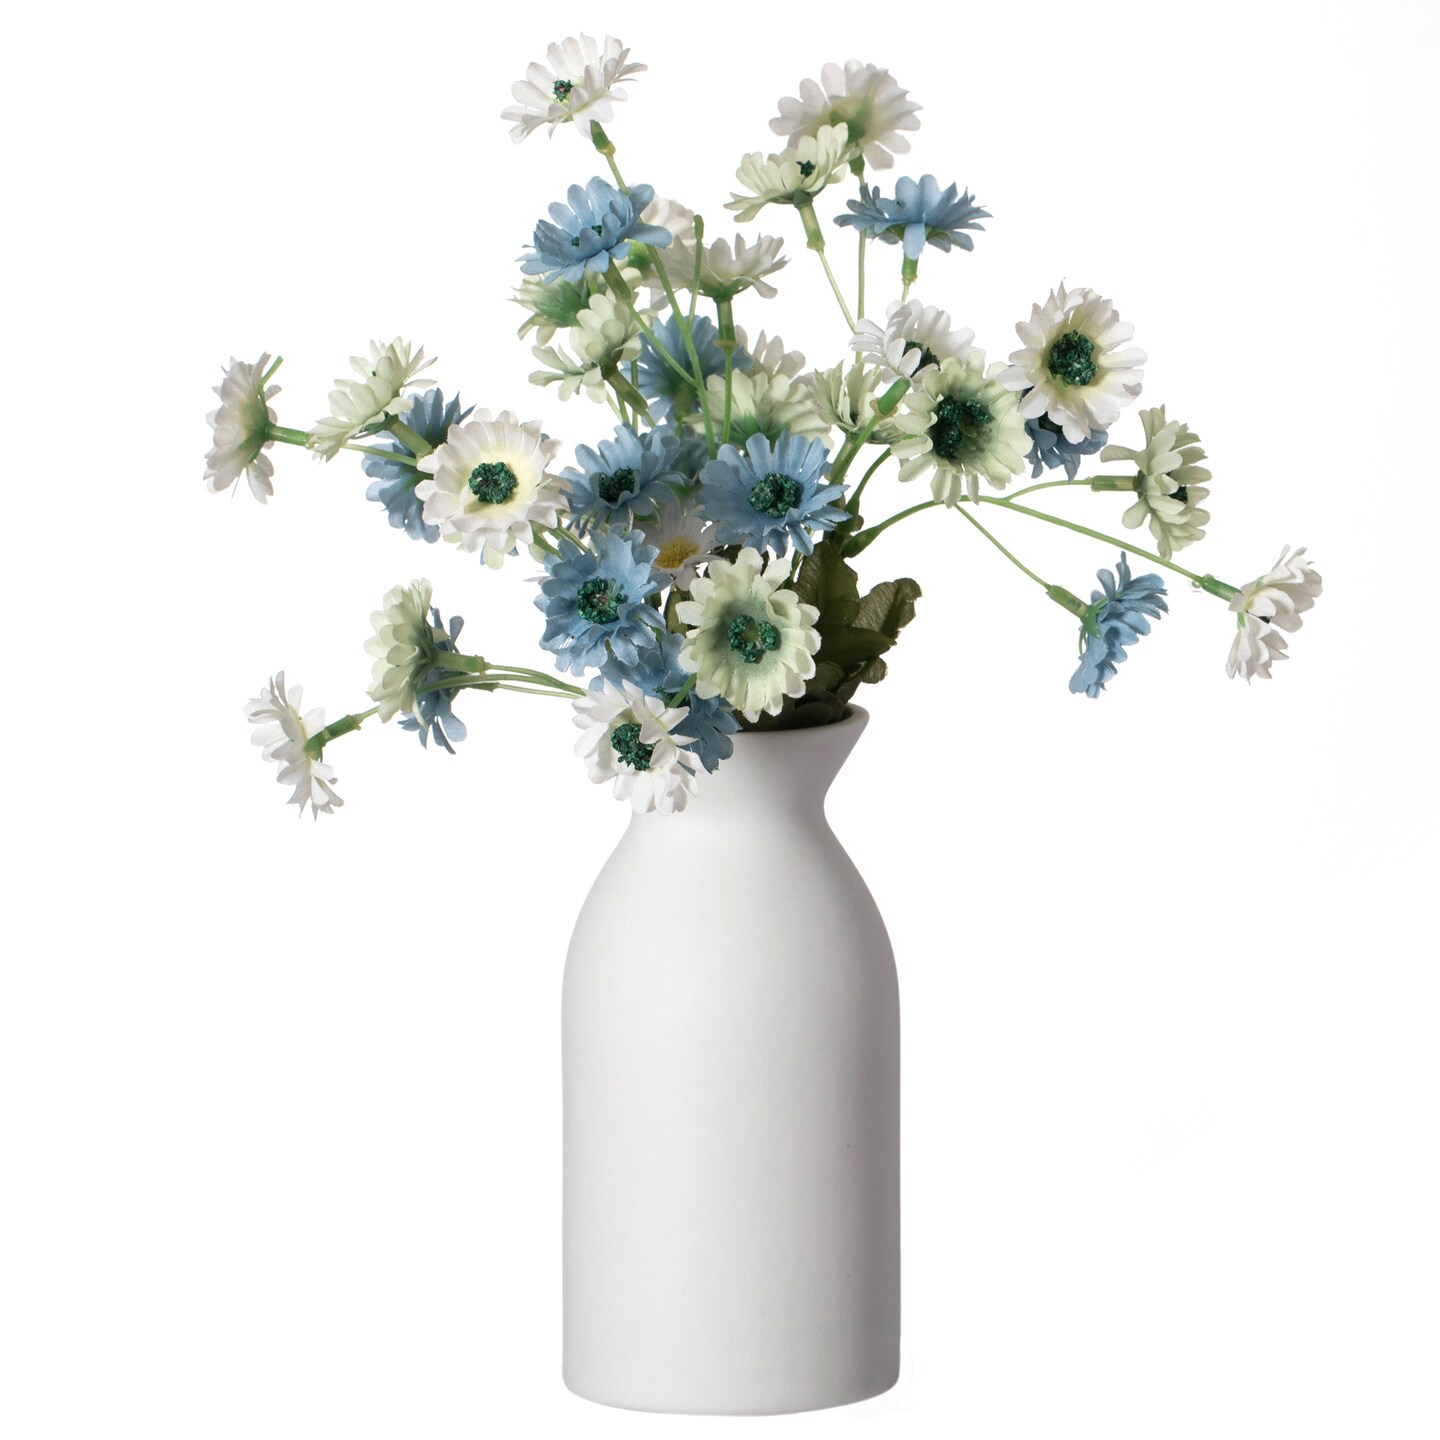 Contemporary White Cylinder Shaped Ceramic Table Flower Vase Holder